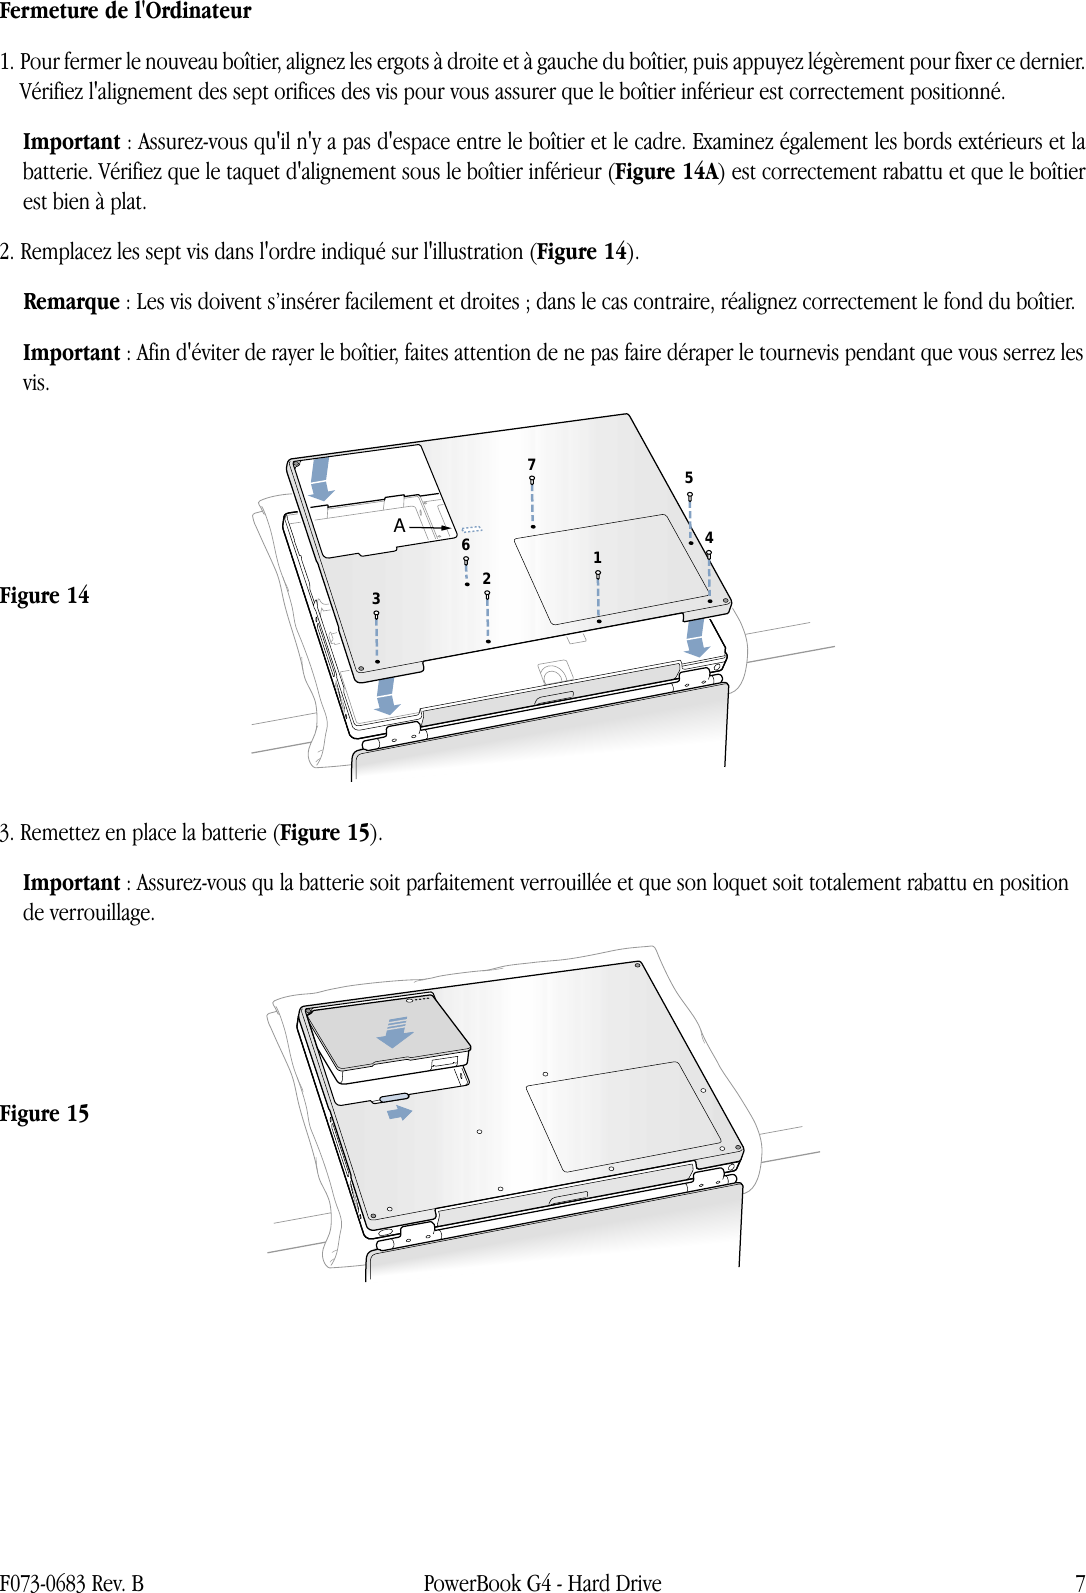 Page 7 of 8 - Apple PowerBook G4 (DVI) Hard Drive User Manual Power Book G4 (DVI, 1GHz/867MHz) - Disque Dur Instructions De Remplacement Pbg4dvi-hd-cip